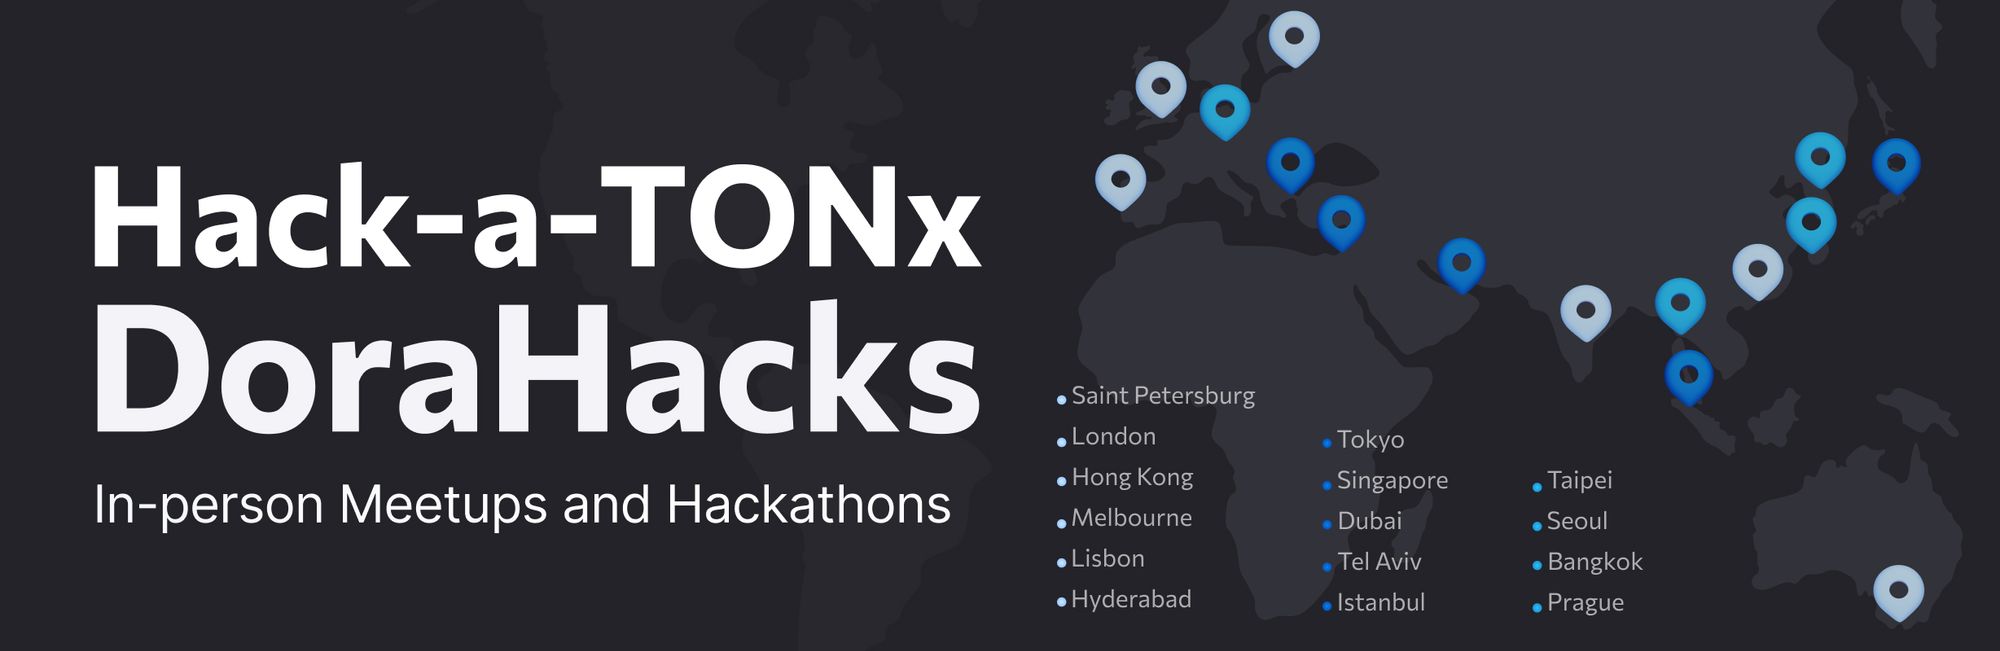 Highlights revealed: Hack-a-TONx World Tour Meetups Draw Crowds Worldwide